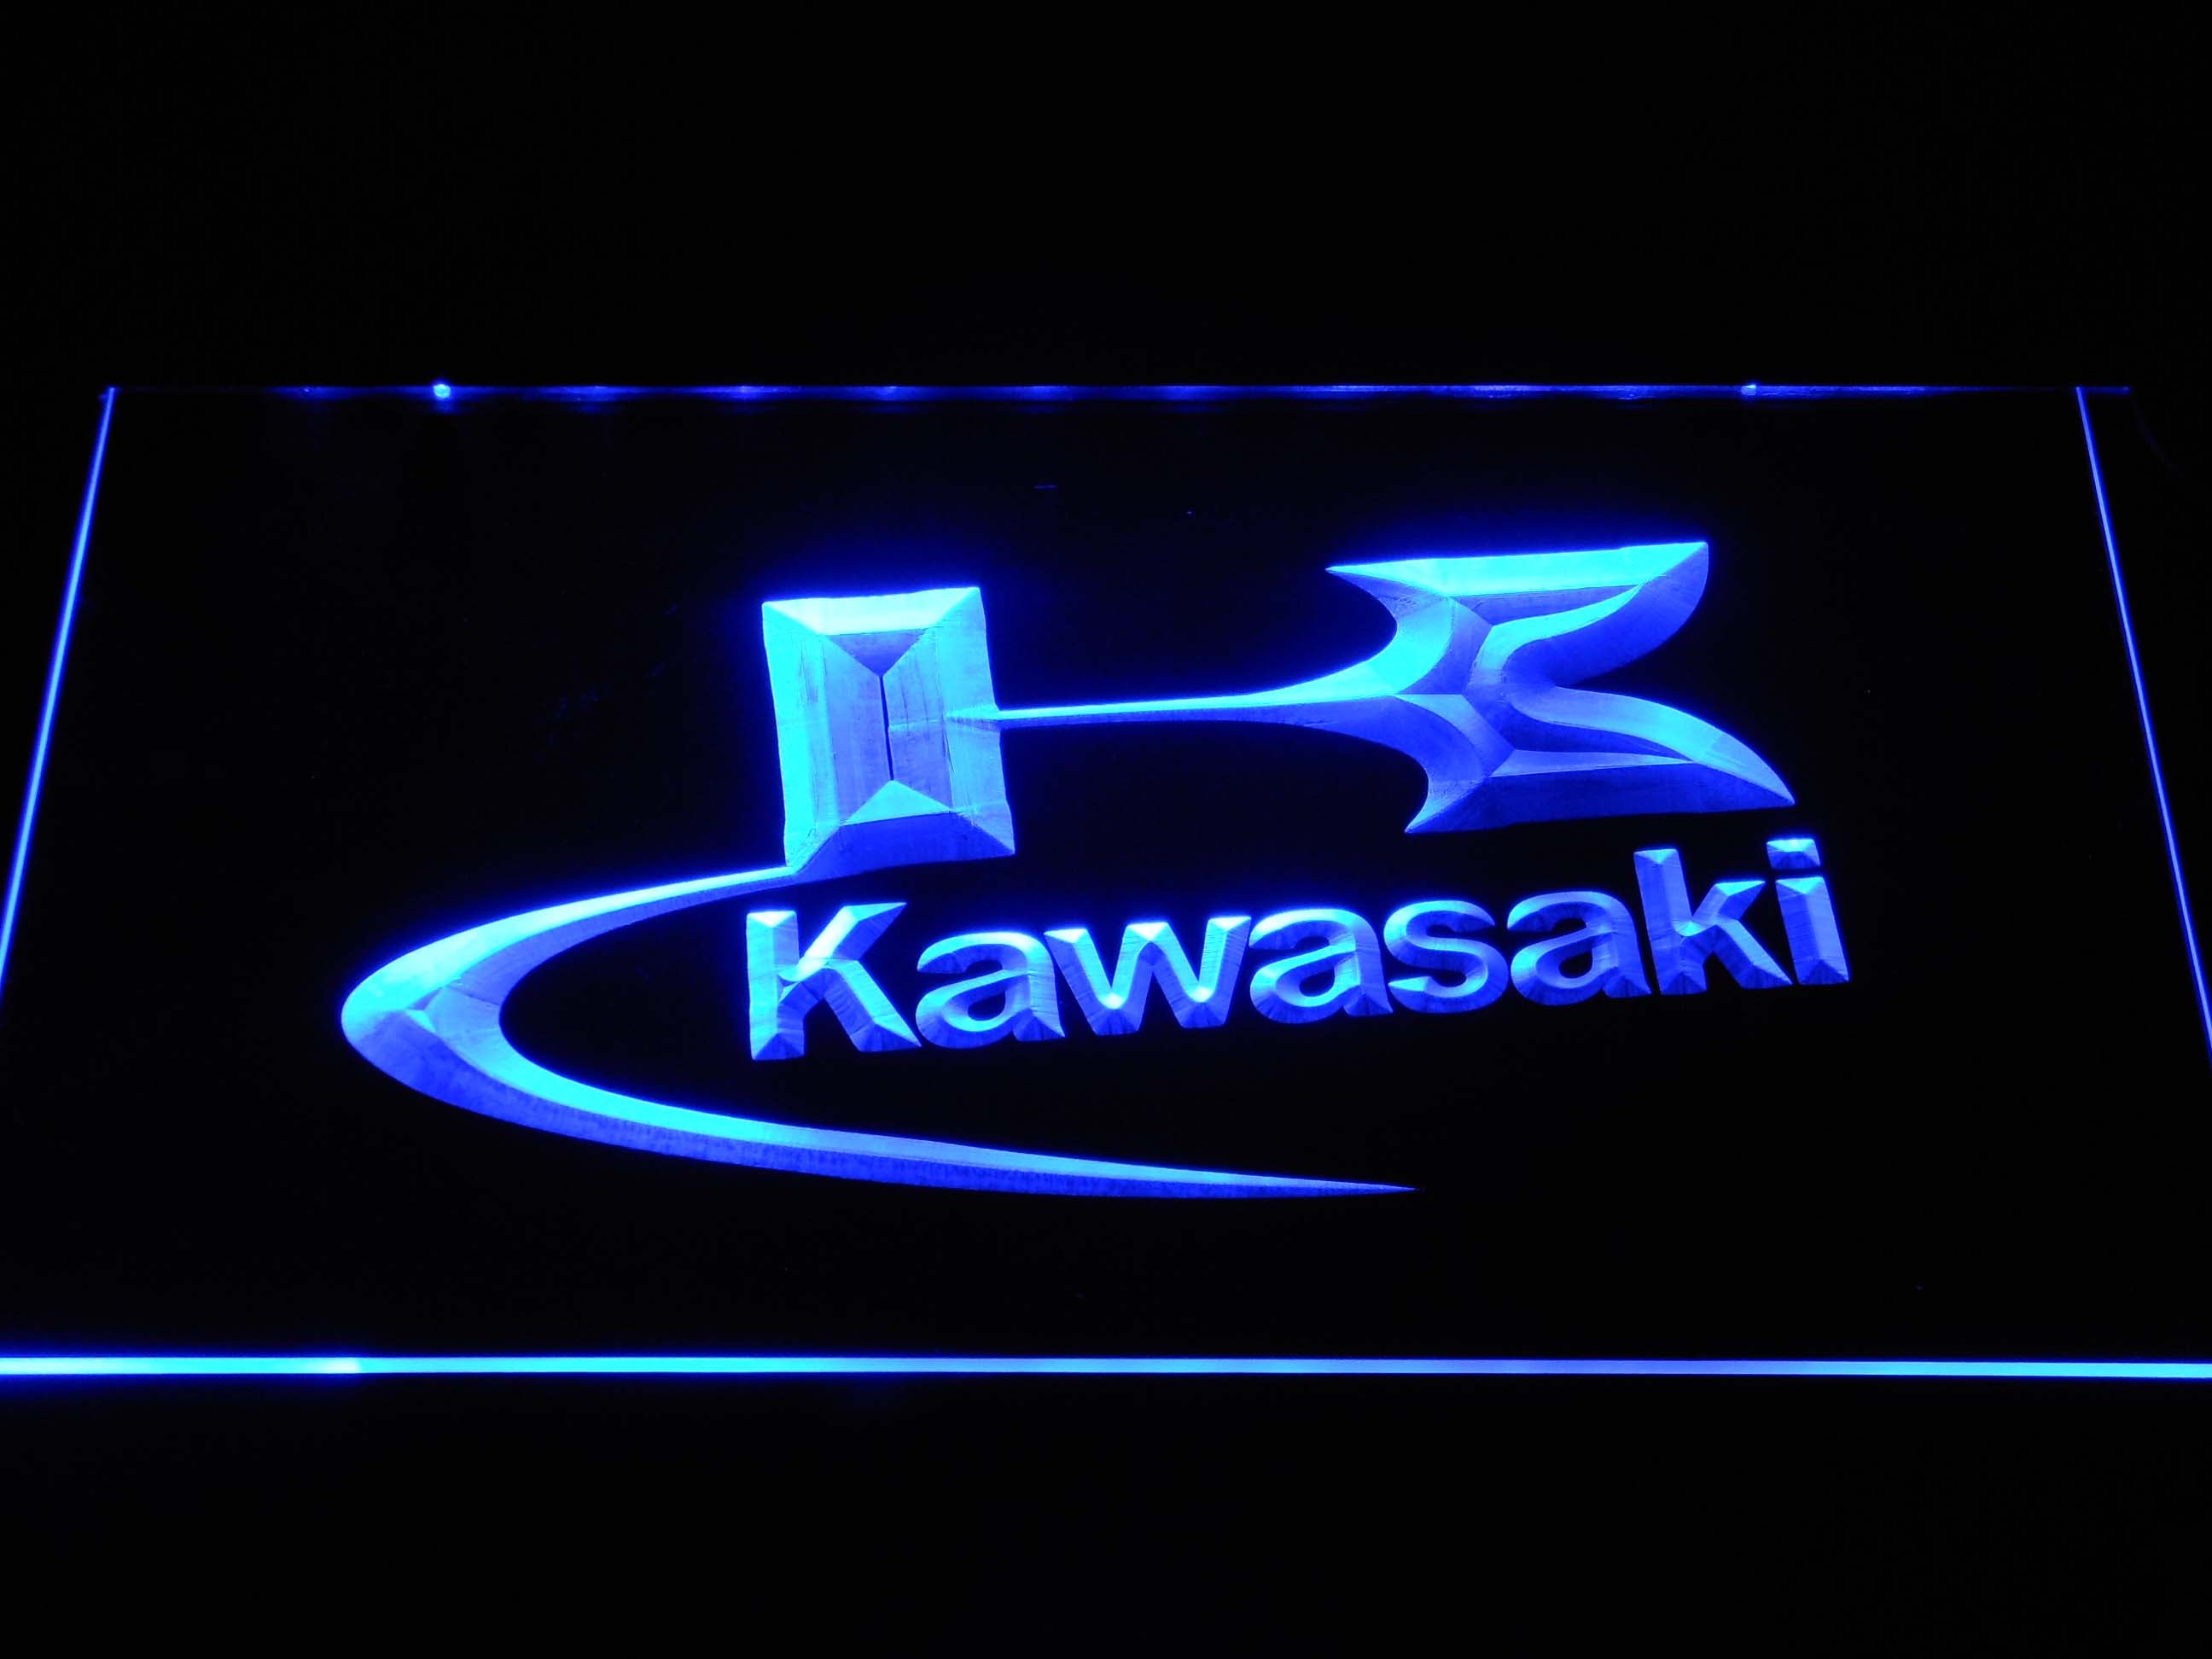 Kawasaki K Mark Neon Light LED Sign